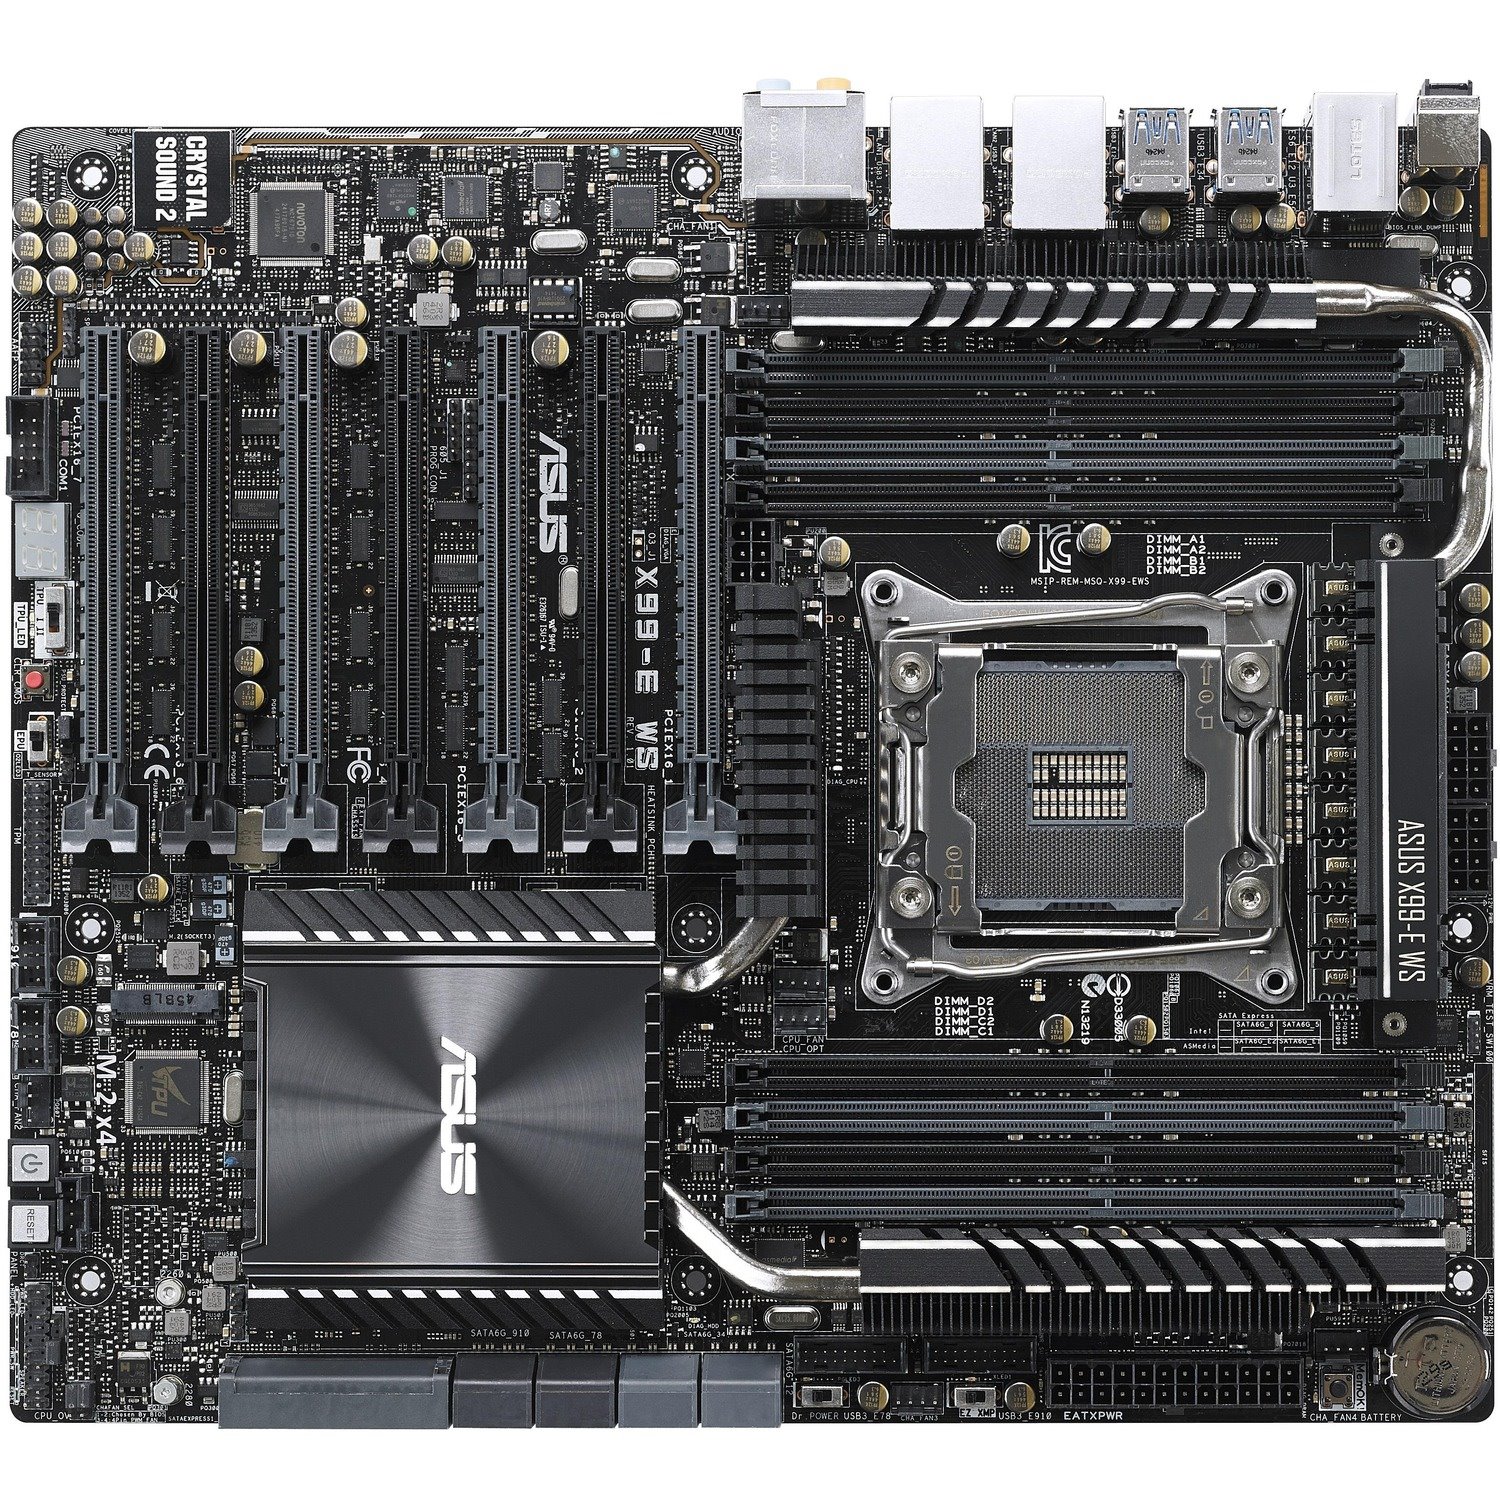 Asus X99-E WS/USB 3.1 Workstation Motherboard - Intel X99 Chipset - Socket LGA 2011-v3 - SSI CEB